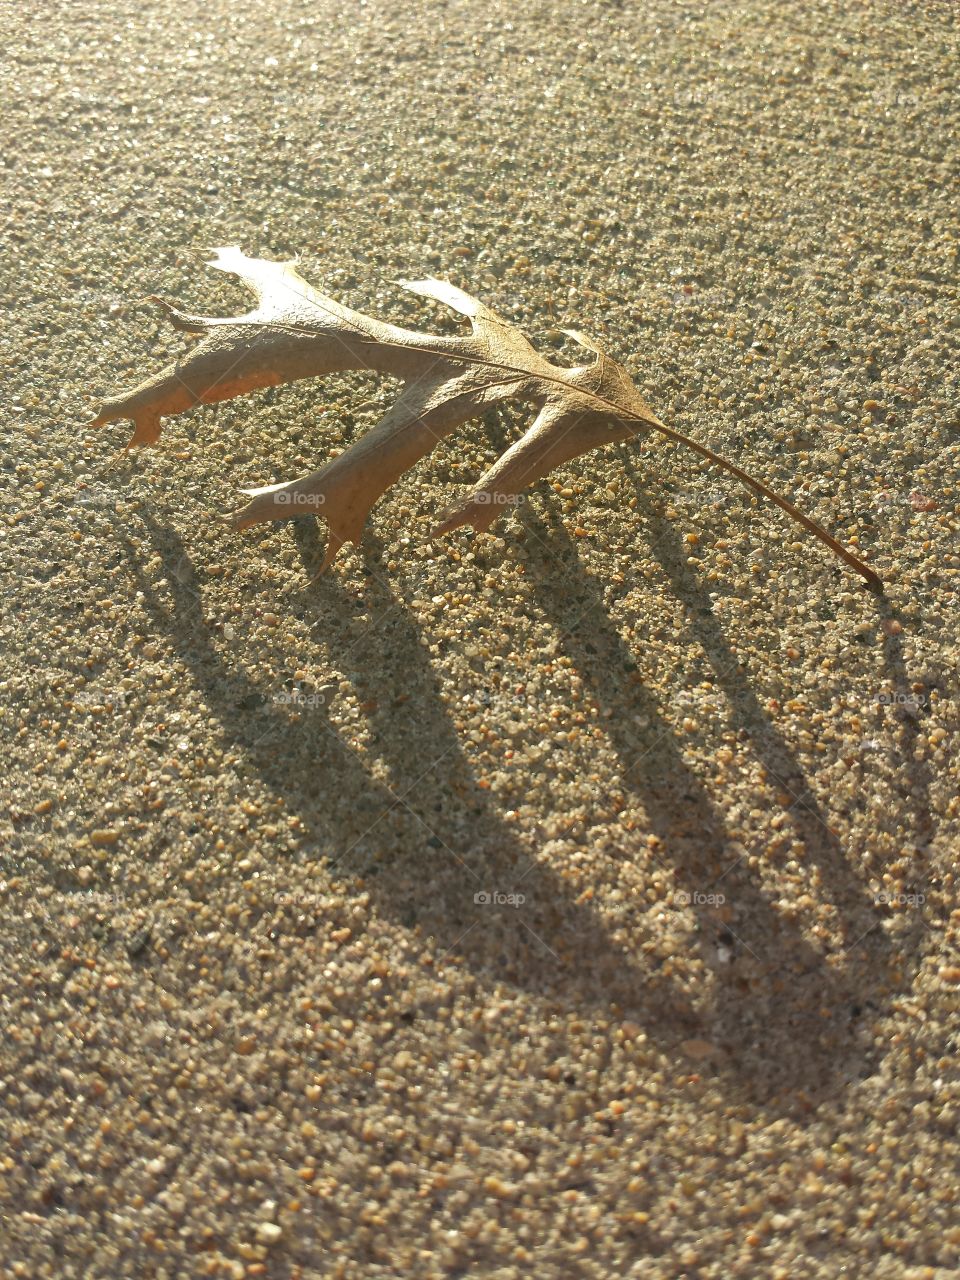 Sunlight falling on dry leaf